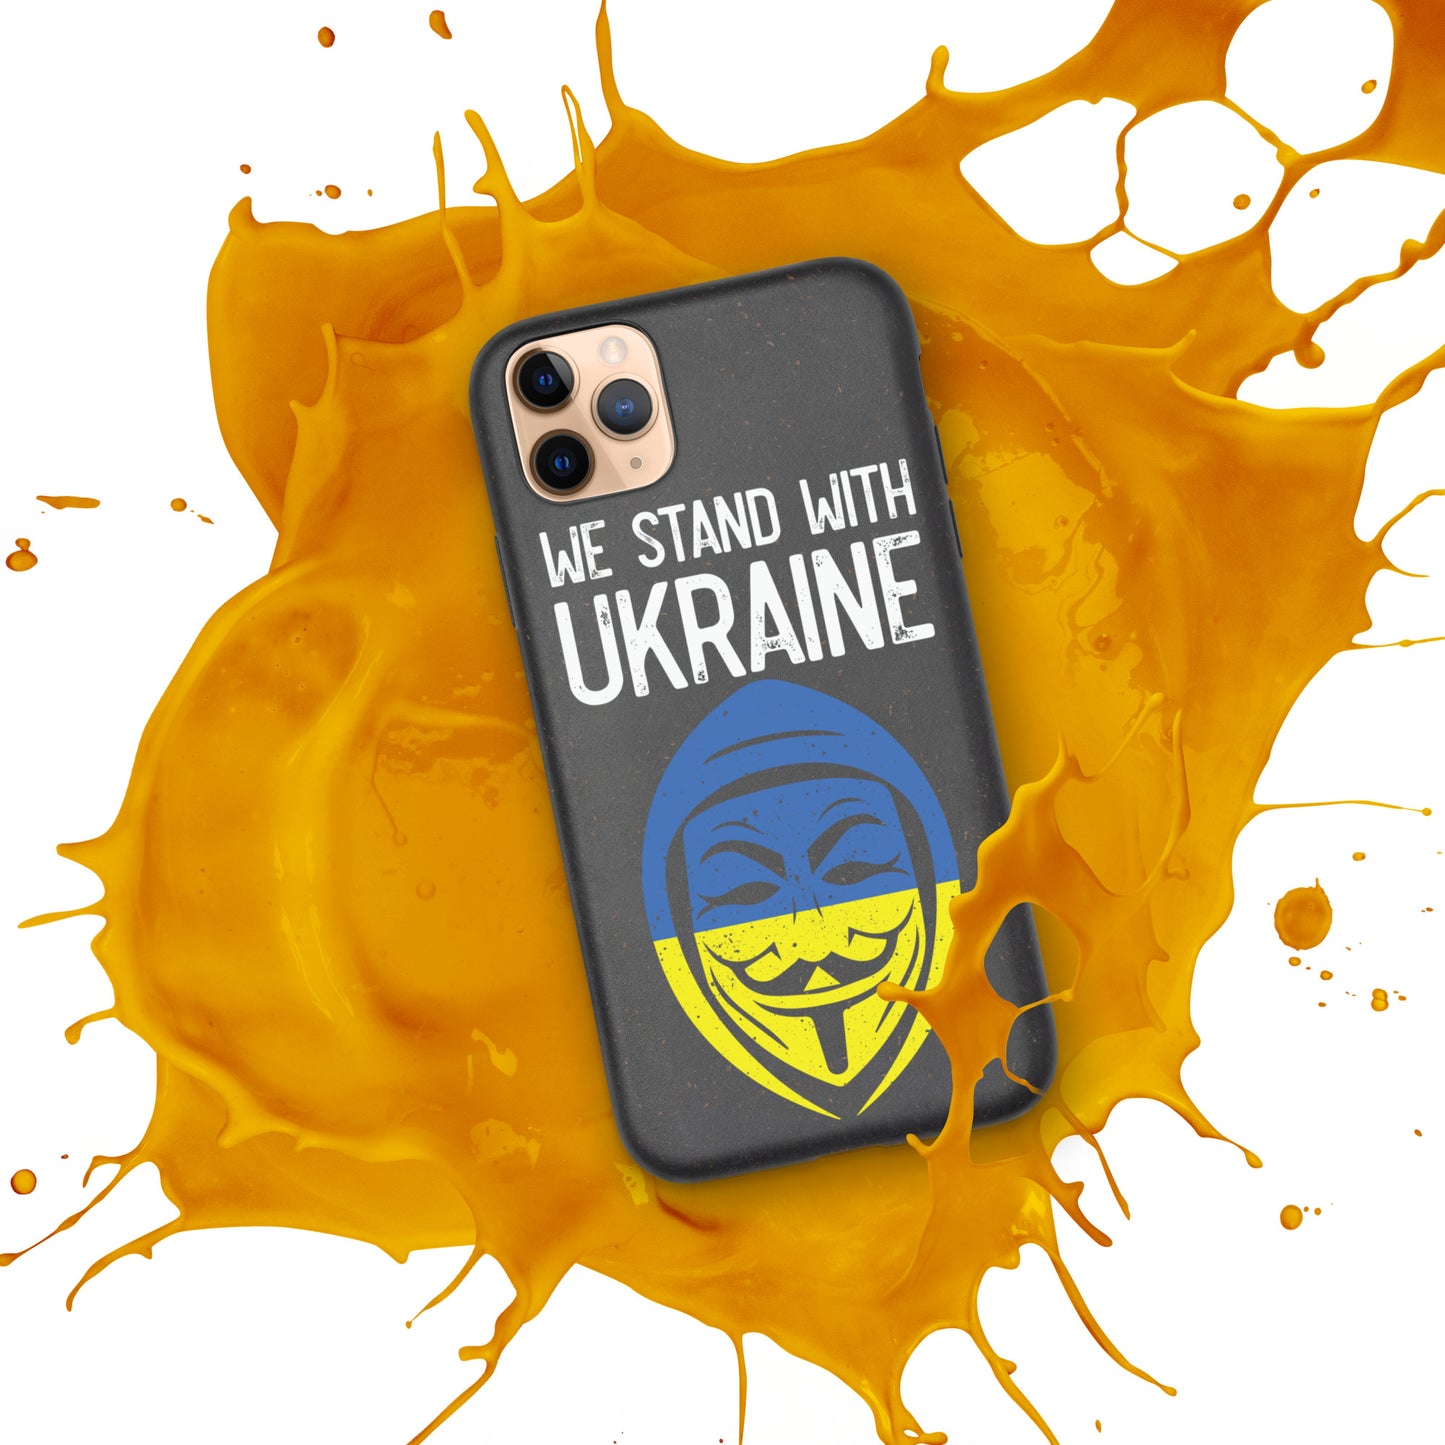 We stand with Ukraine veni vidi vici | Speckled iPhone case